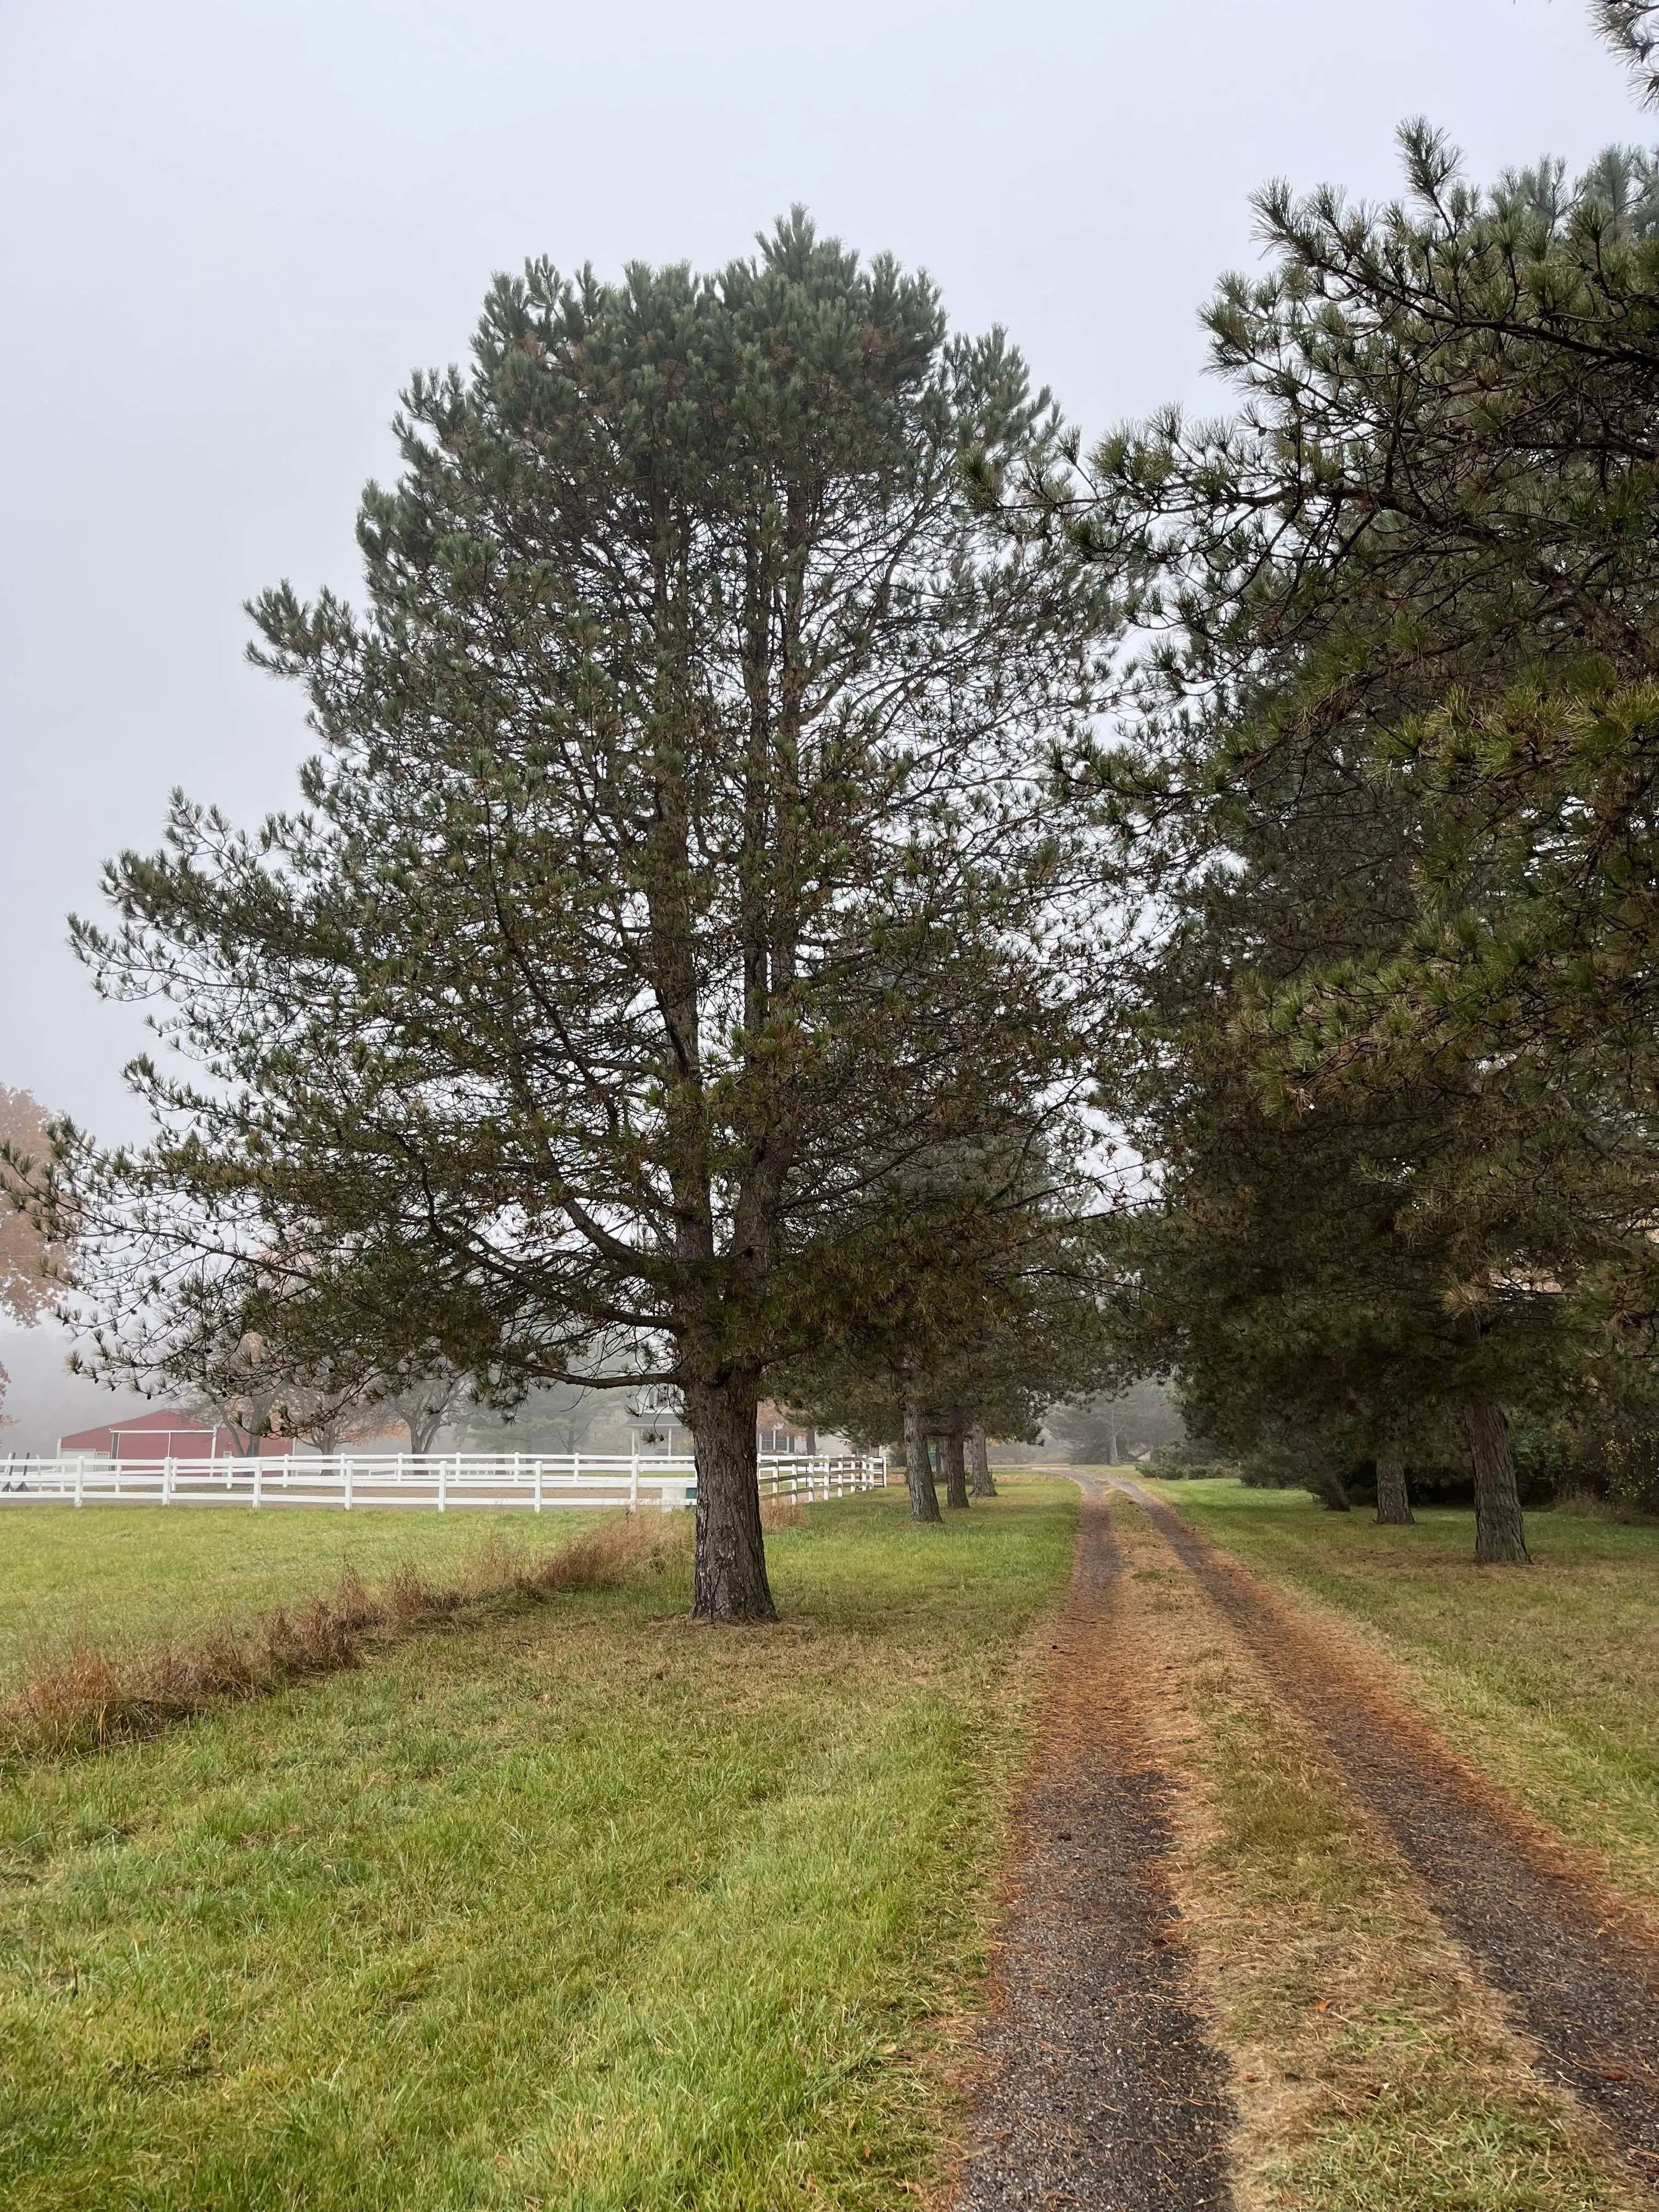 long pine-lined driveway in mist